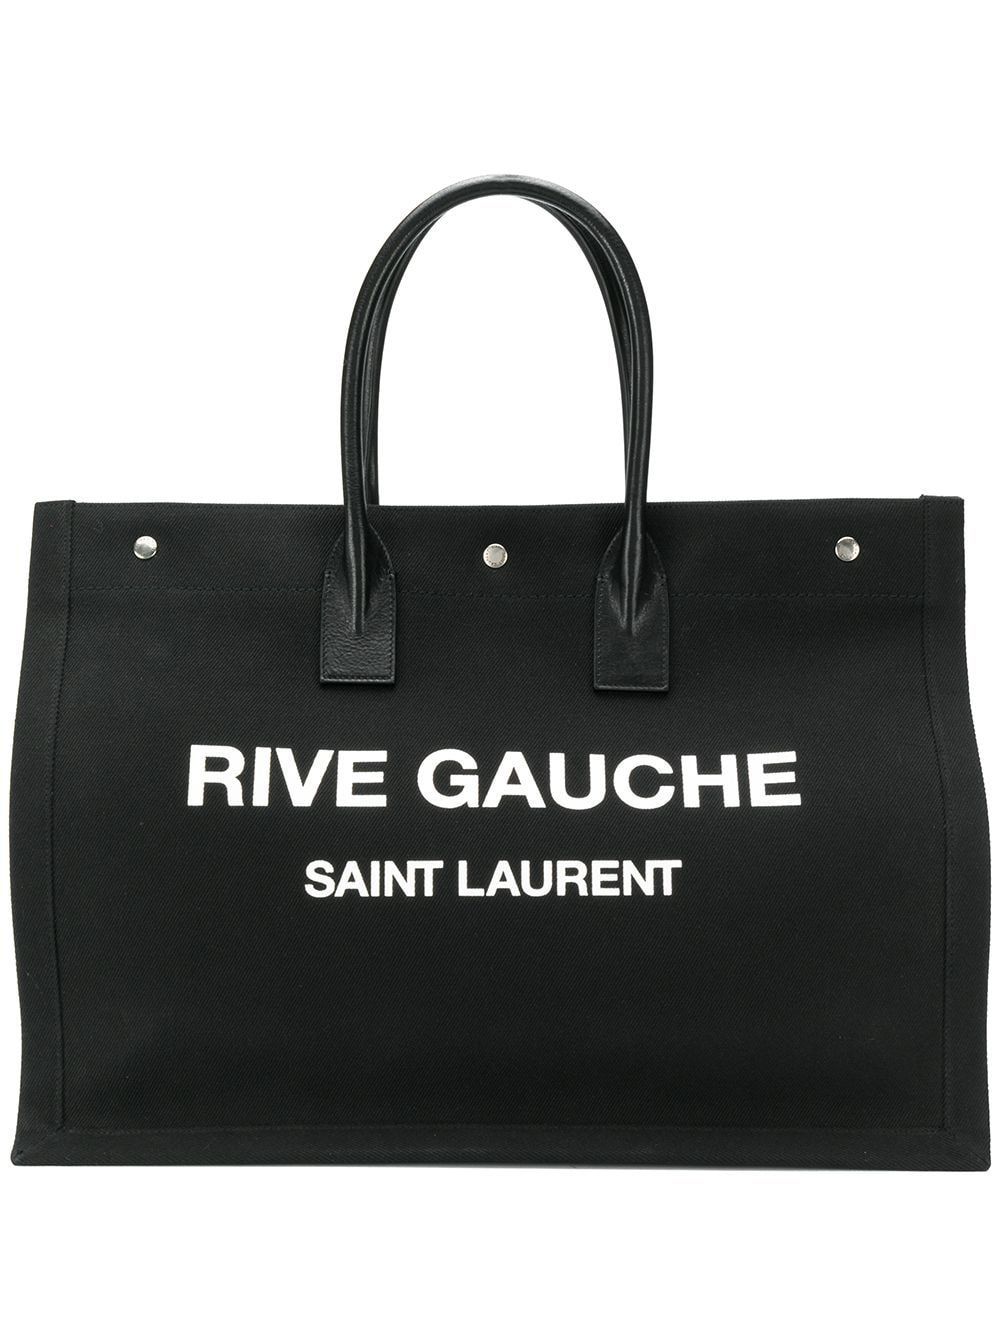 Saint Laurent Noe Rive Gauche Large Tote Bag - Farfetch | Farfetch Global